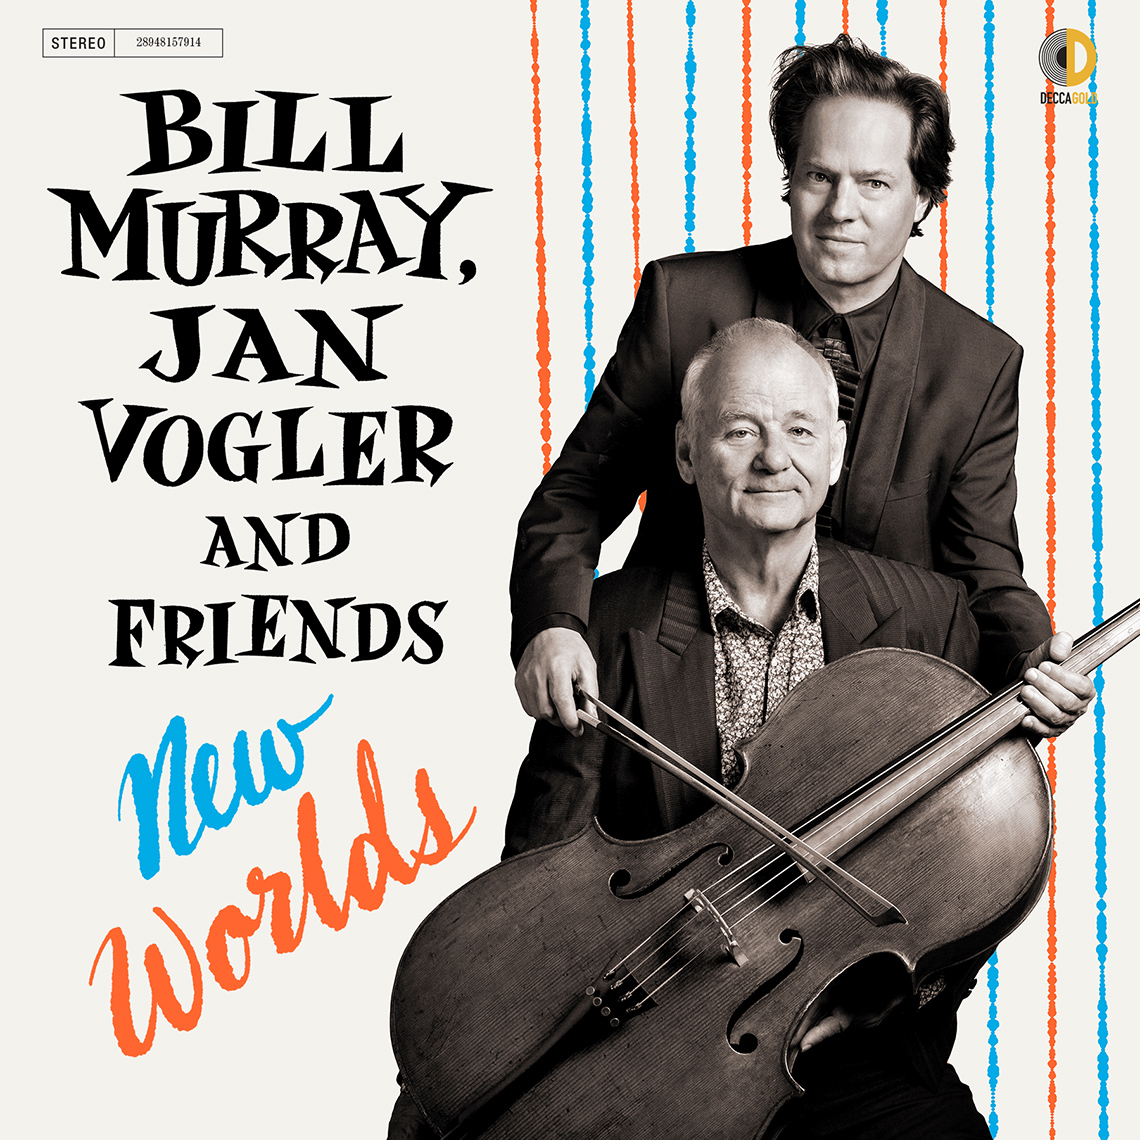 Bill Murray and Jan Vogler